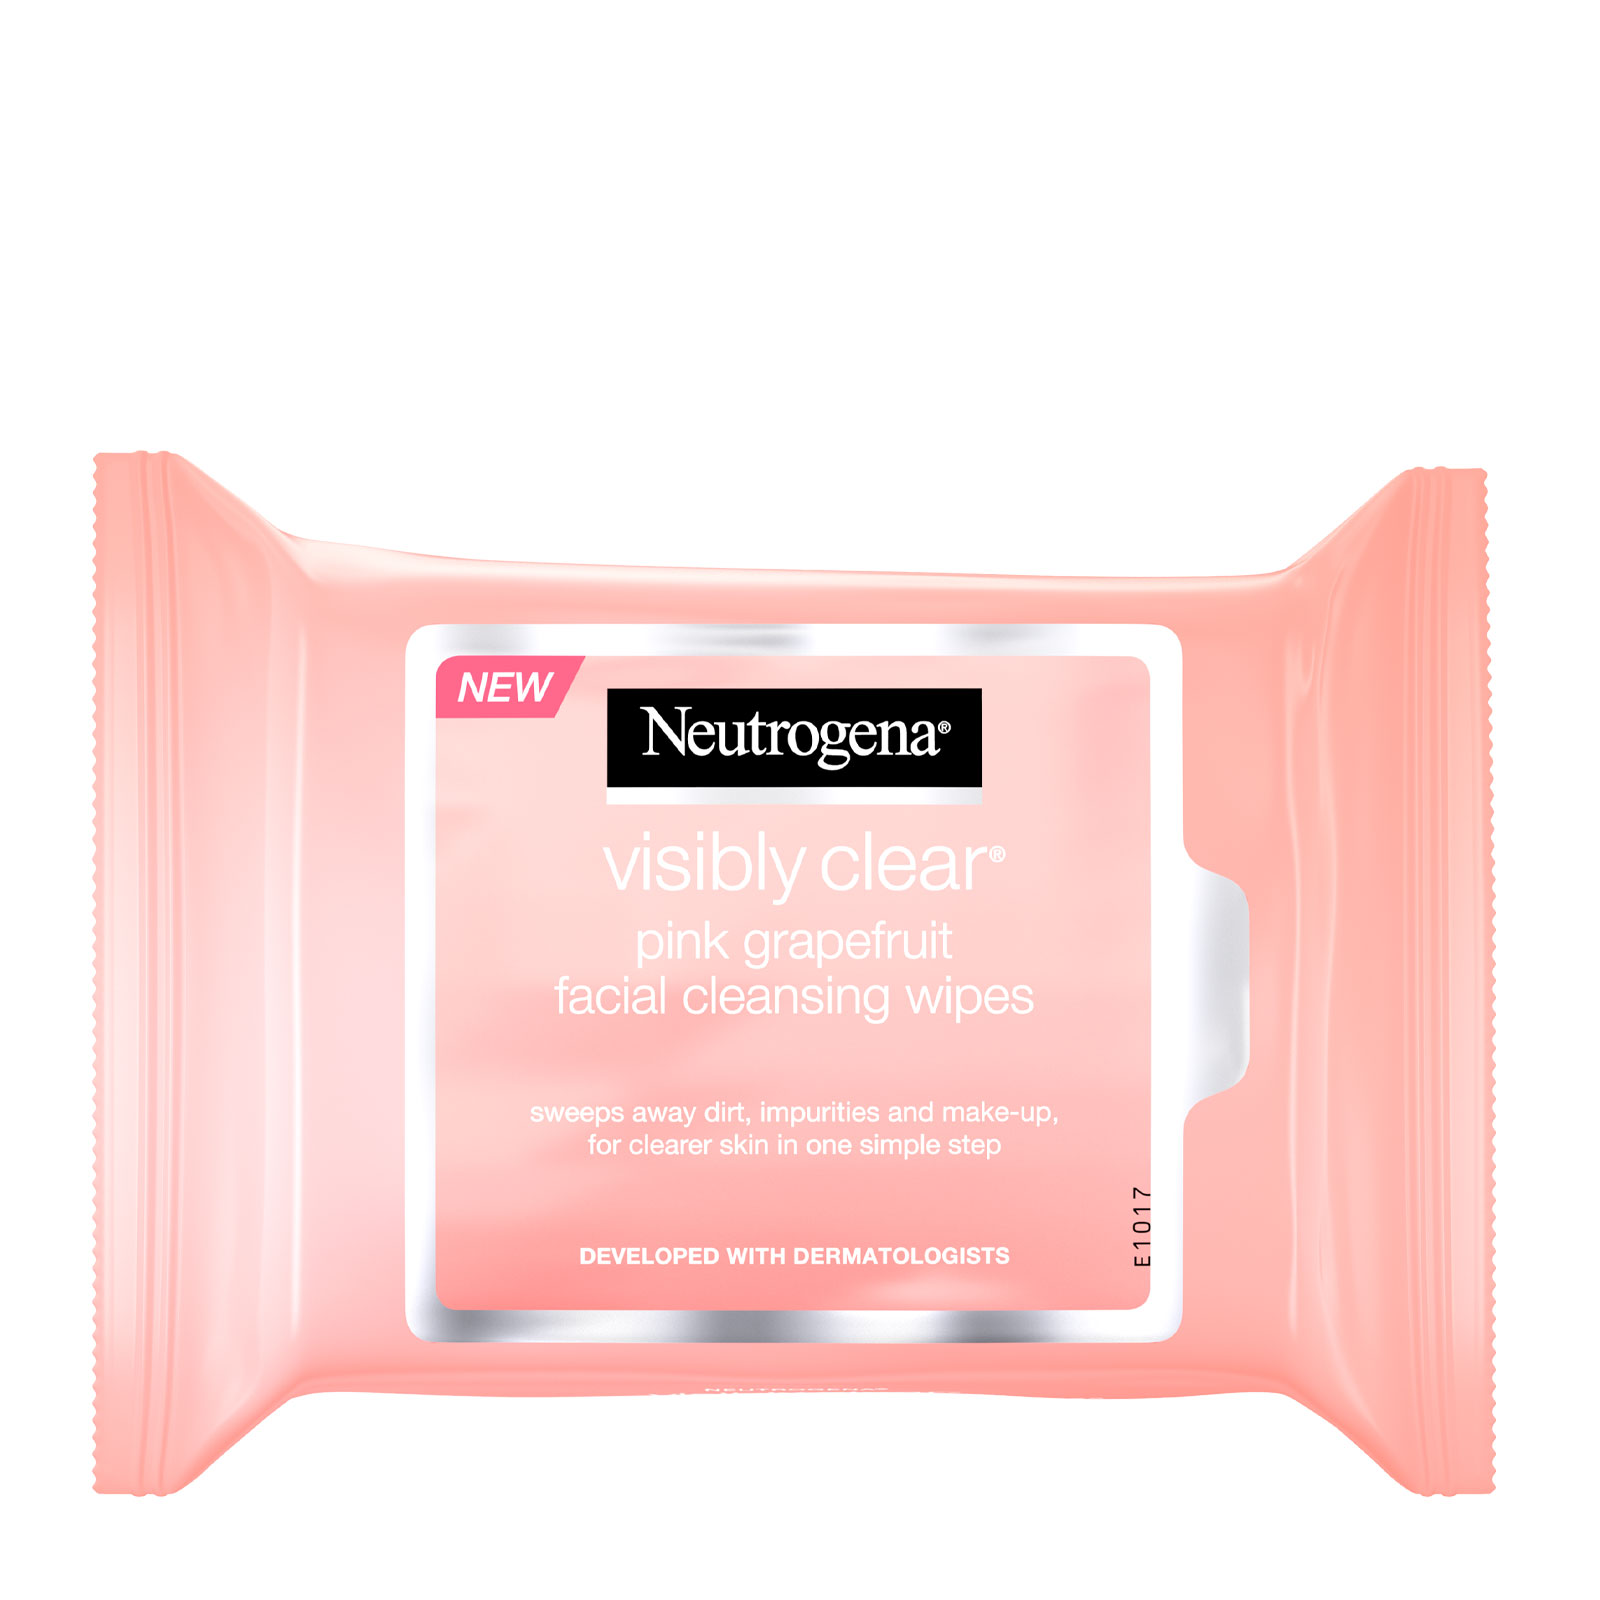 Neutrogena 露得清 粉红色葡萄柚卸妆湿巾纸 25片